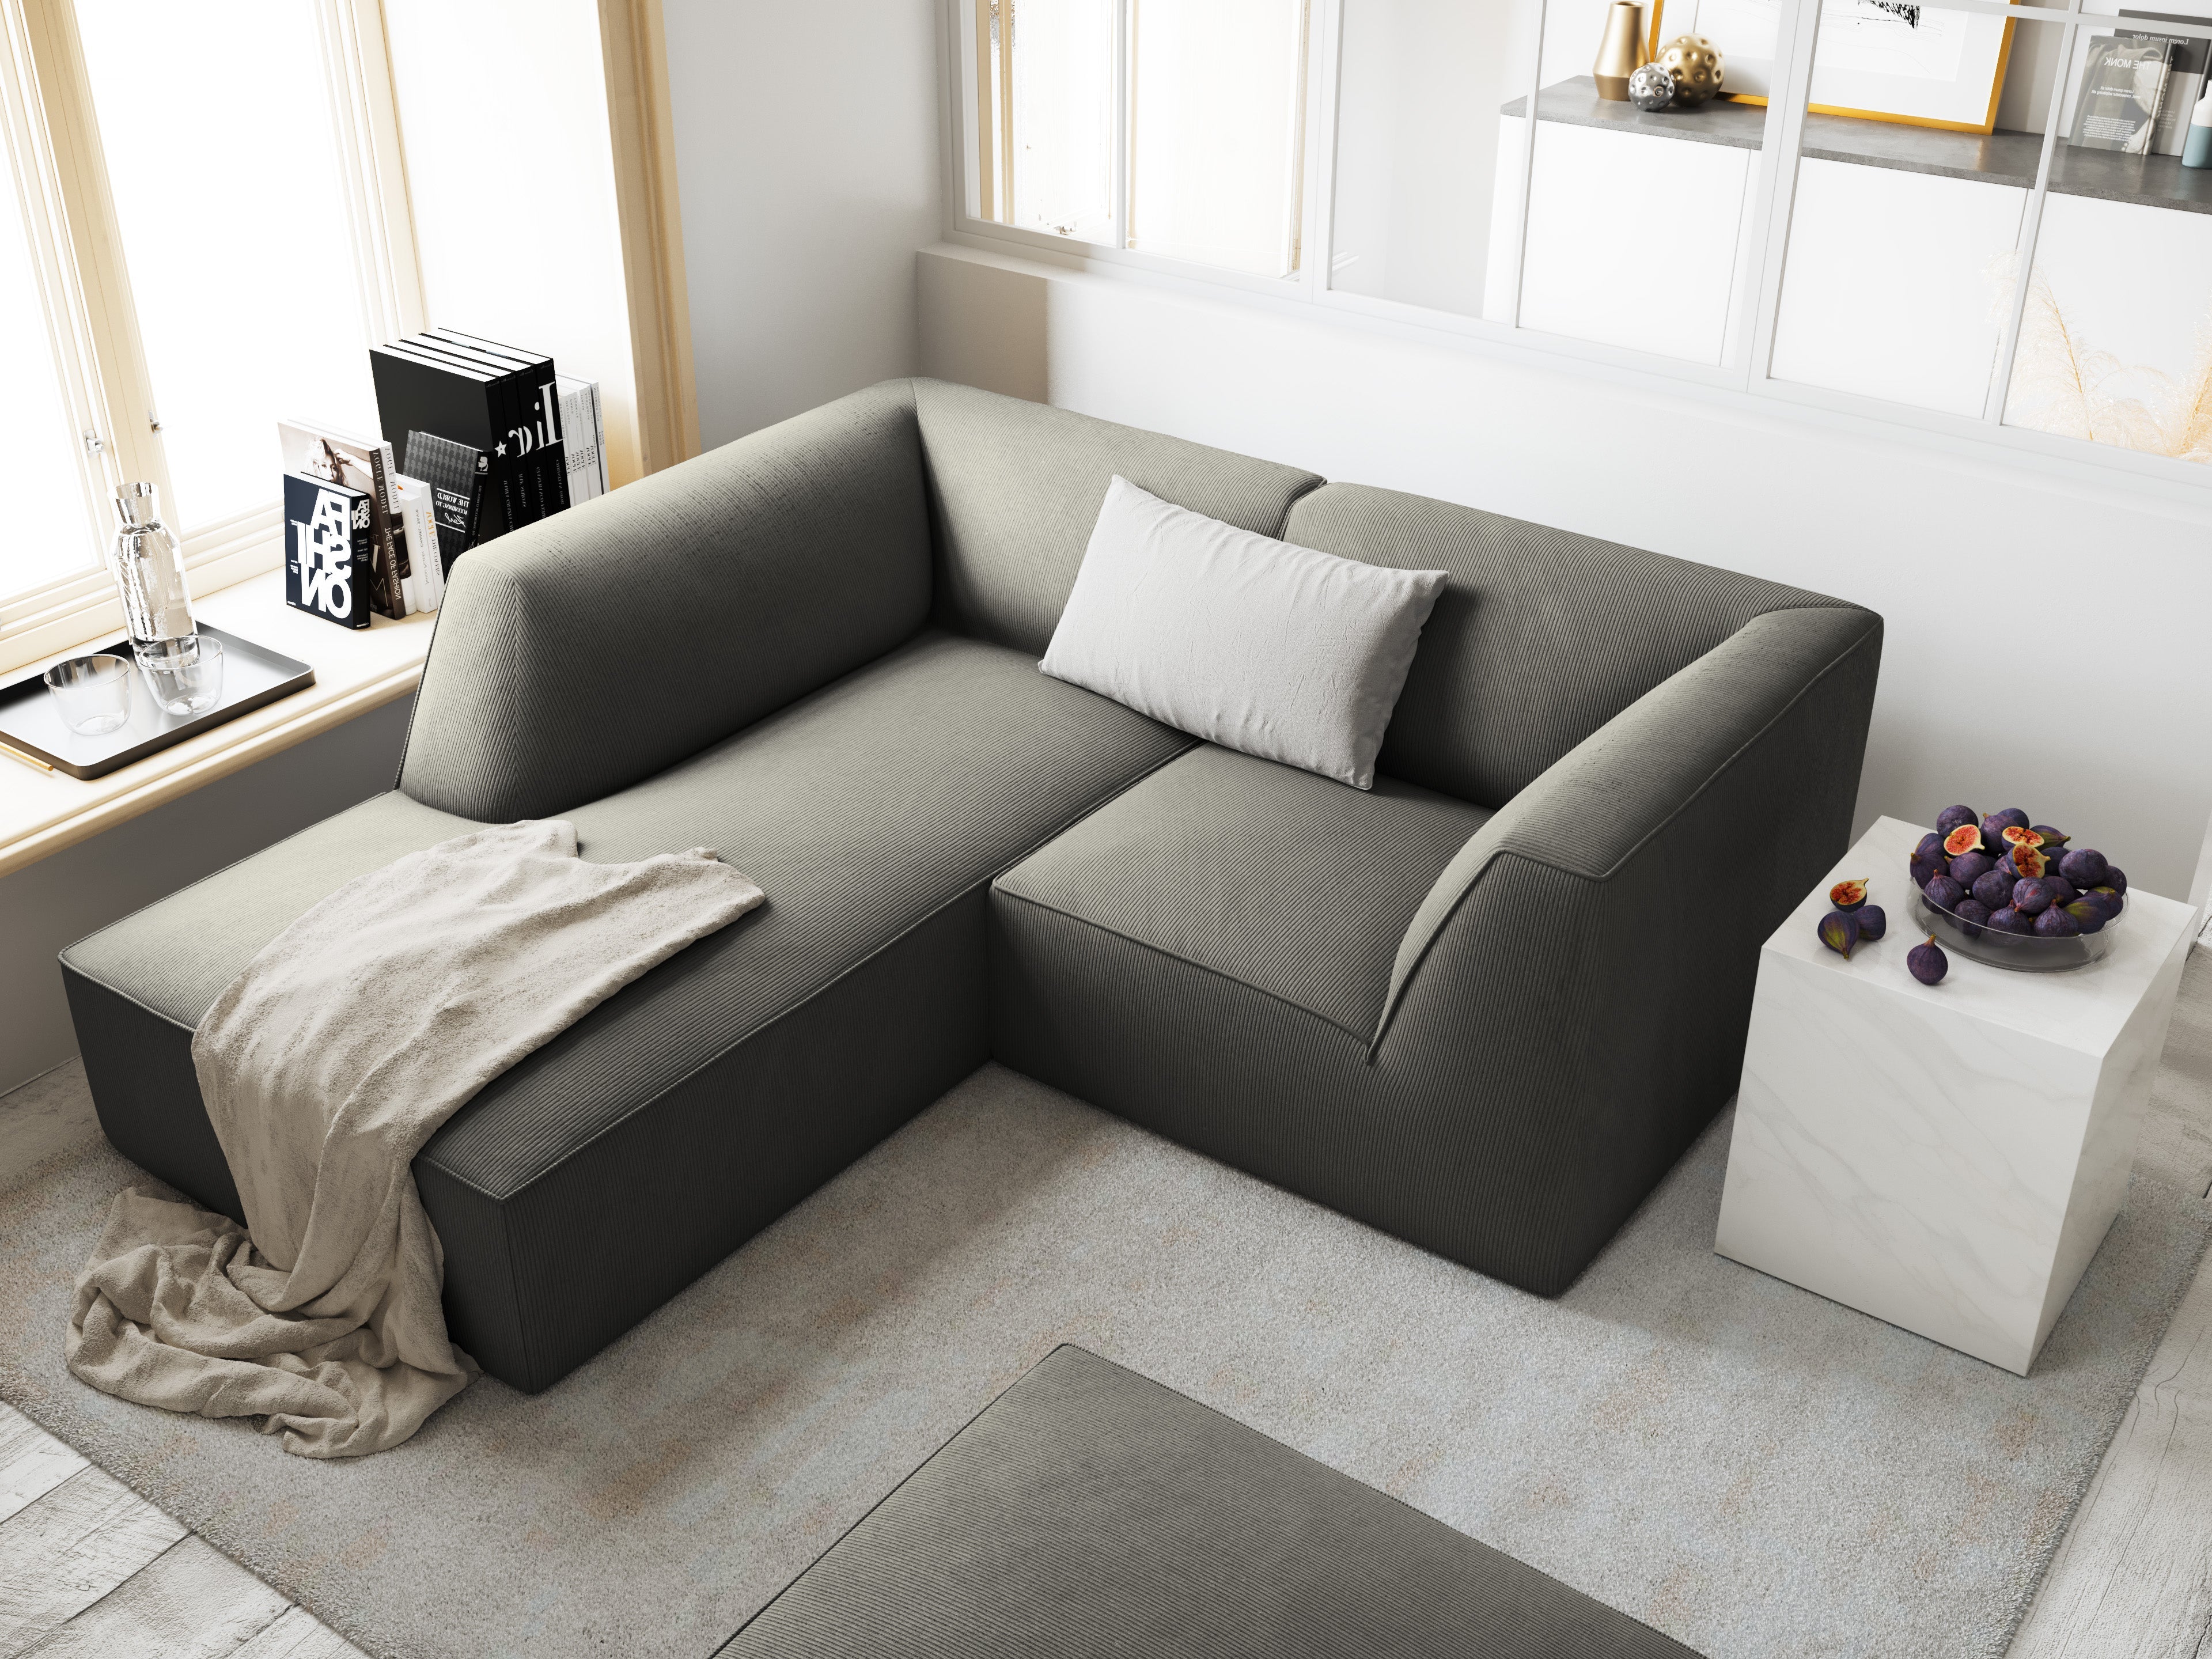 A corner for minimalist interiors